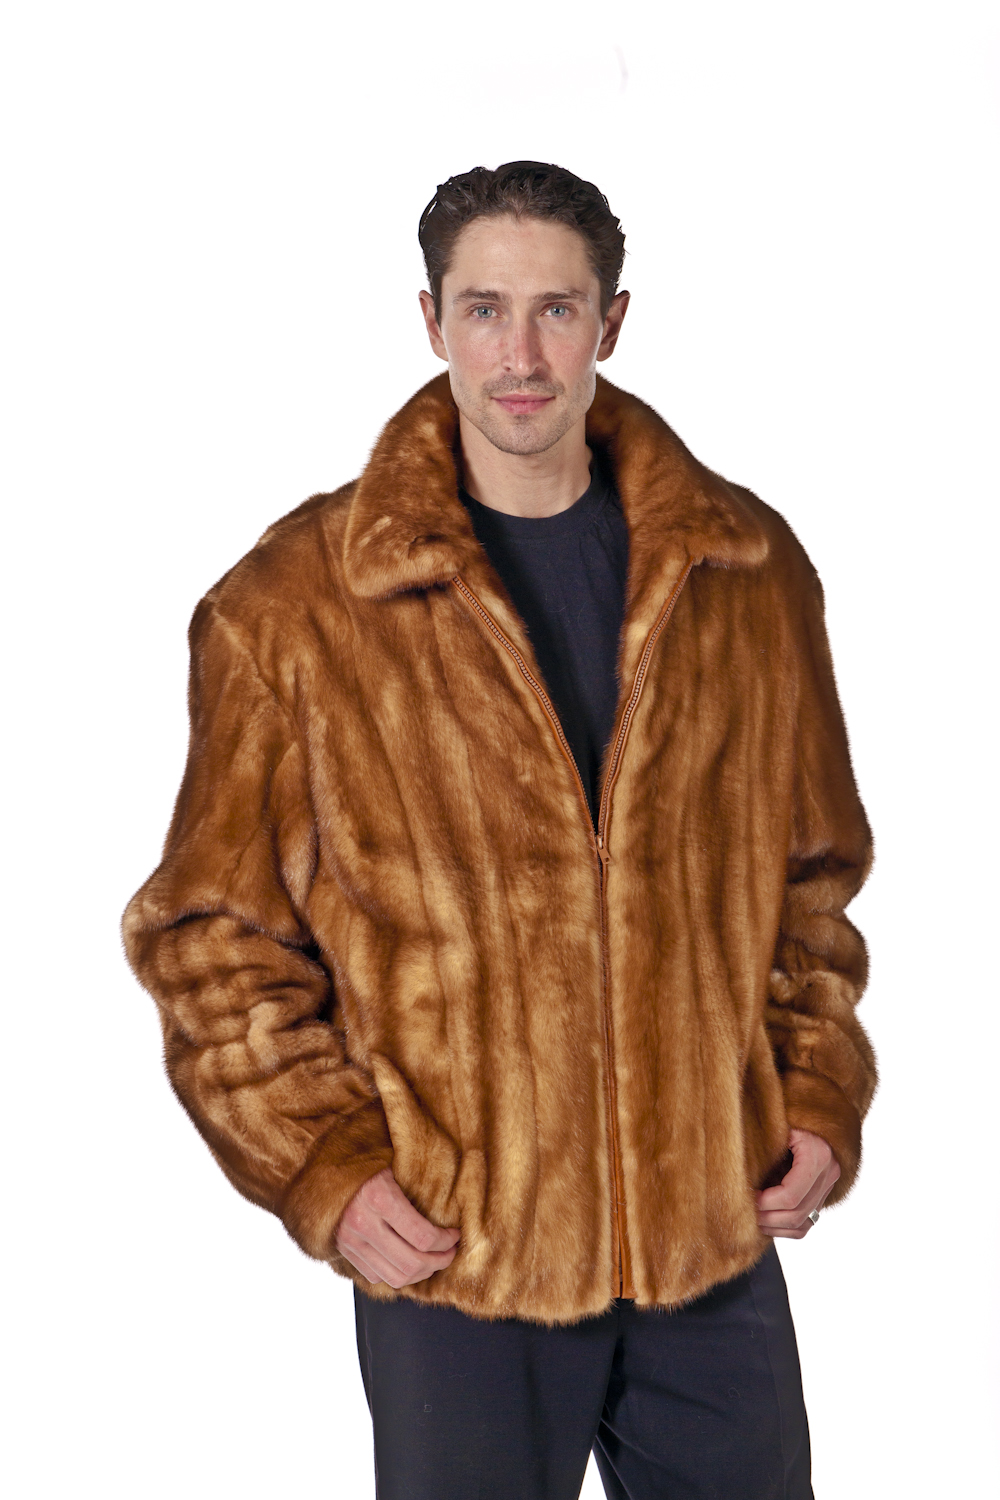 Reversible Black Mink Fur Coat for Men 54